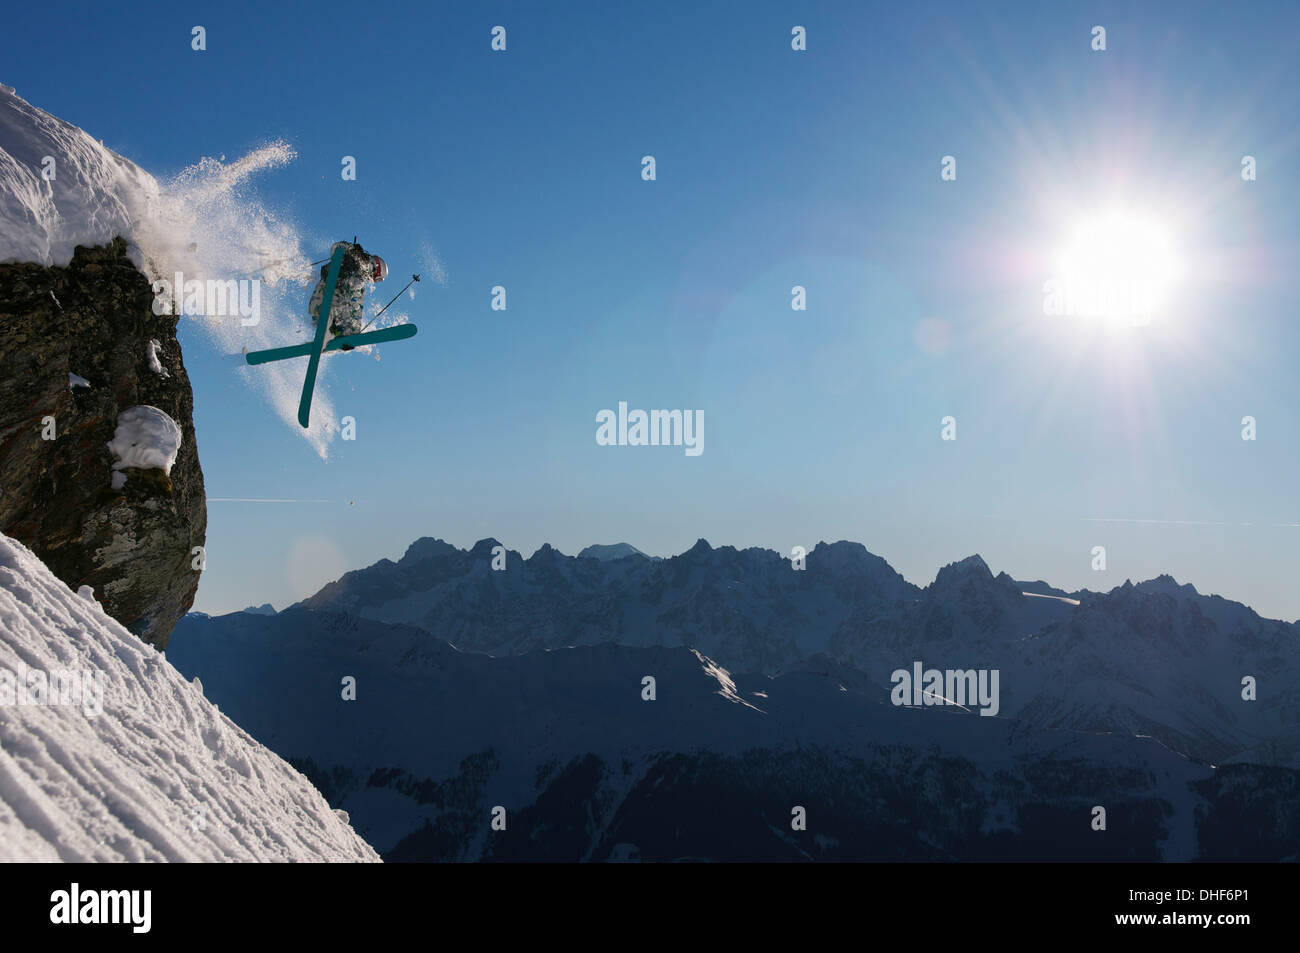 Man skiing off cliff, Verbier, Switzerland Stock Photo